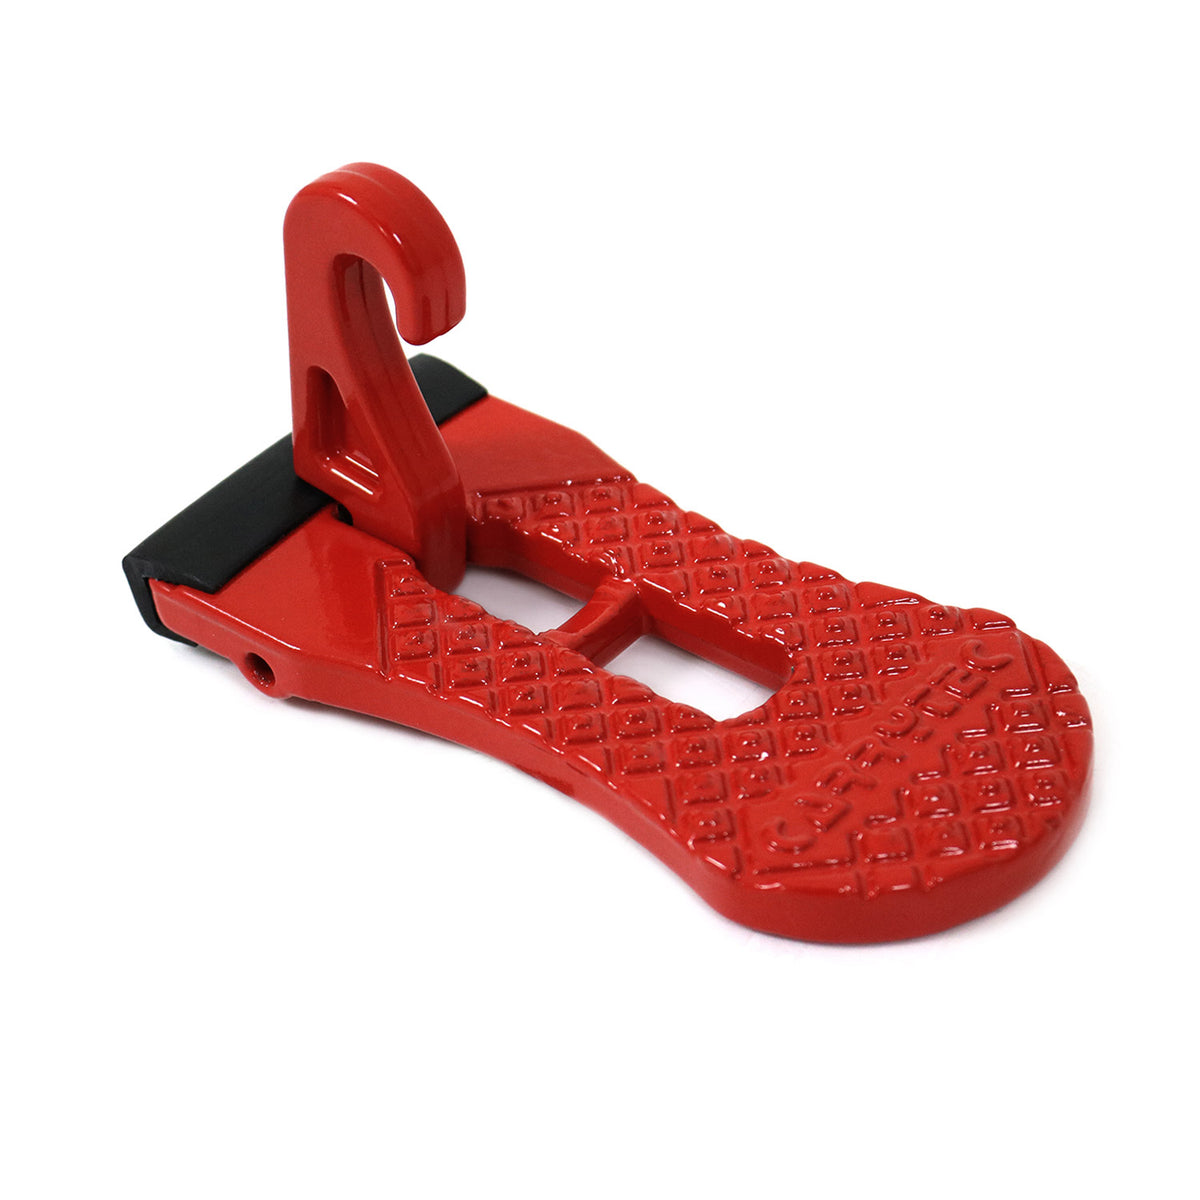 Door pedal foot pedal ladder footrest door hook climbing aid aluminum red